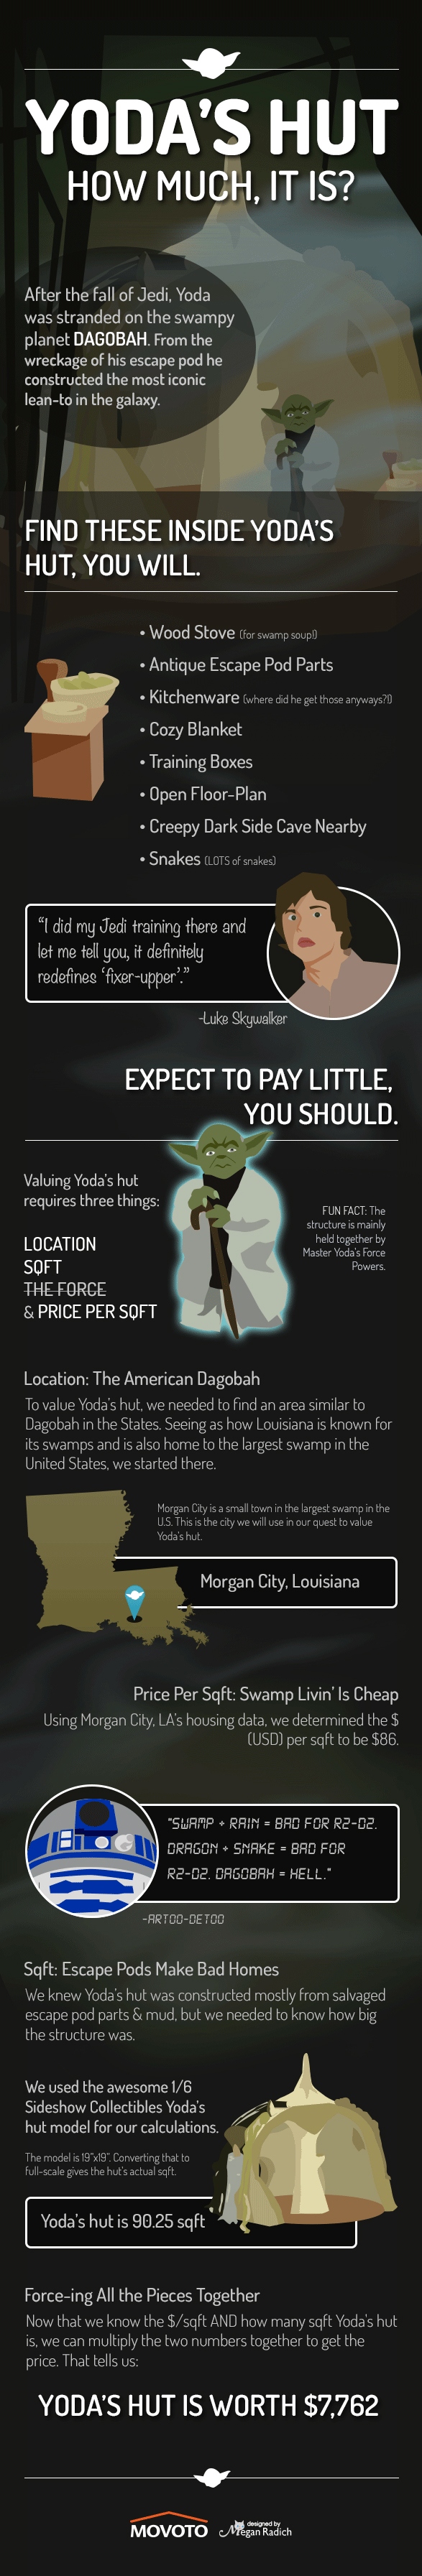 yodas_hut_infographic